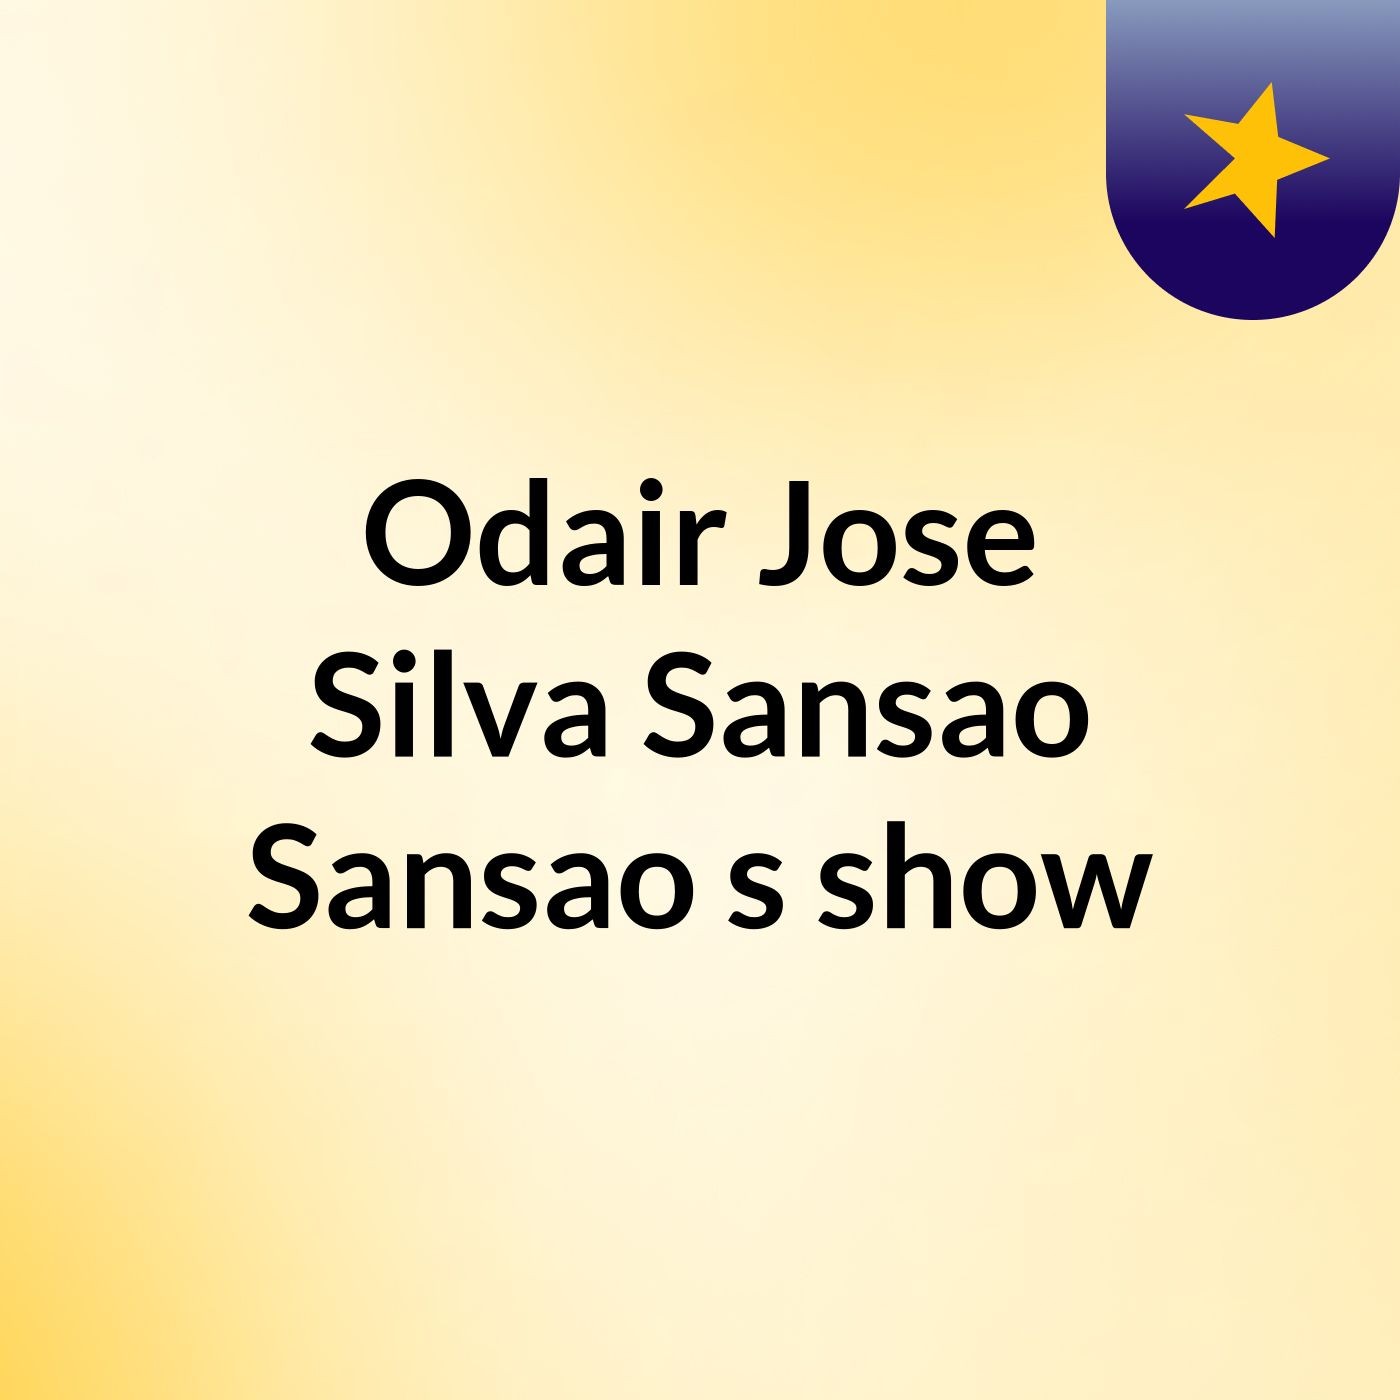 Odair Jose Silva Sansao Sansao's show